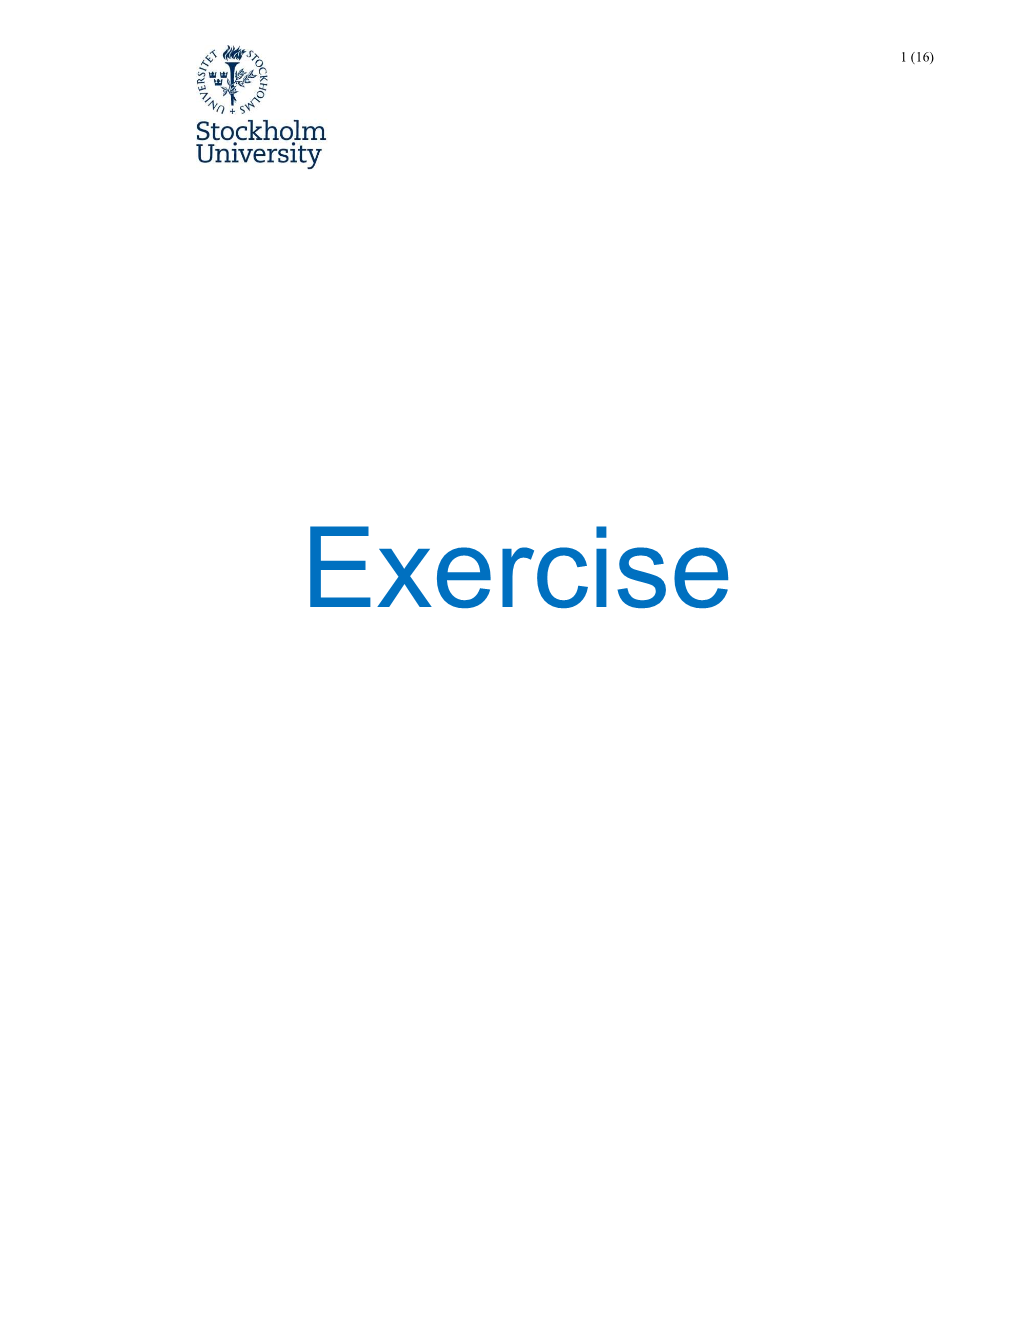 Exercise Programs